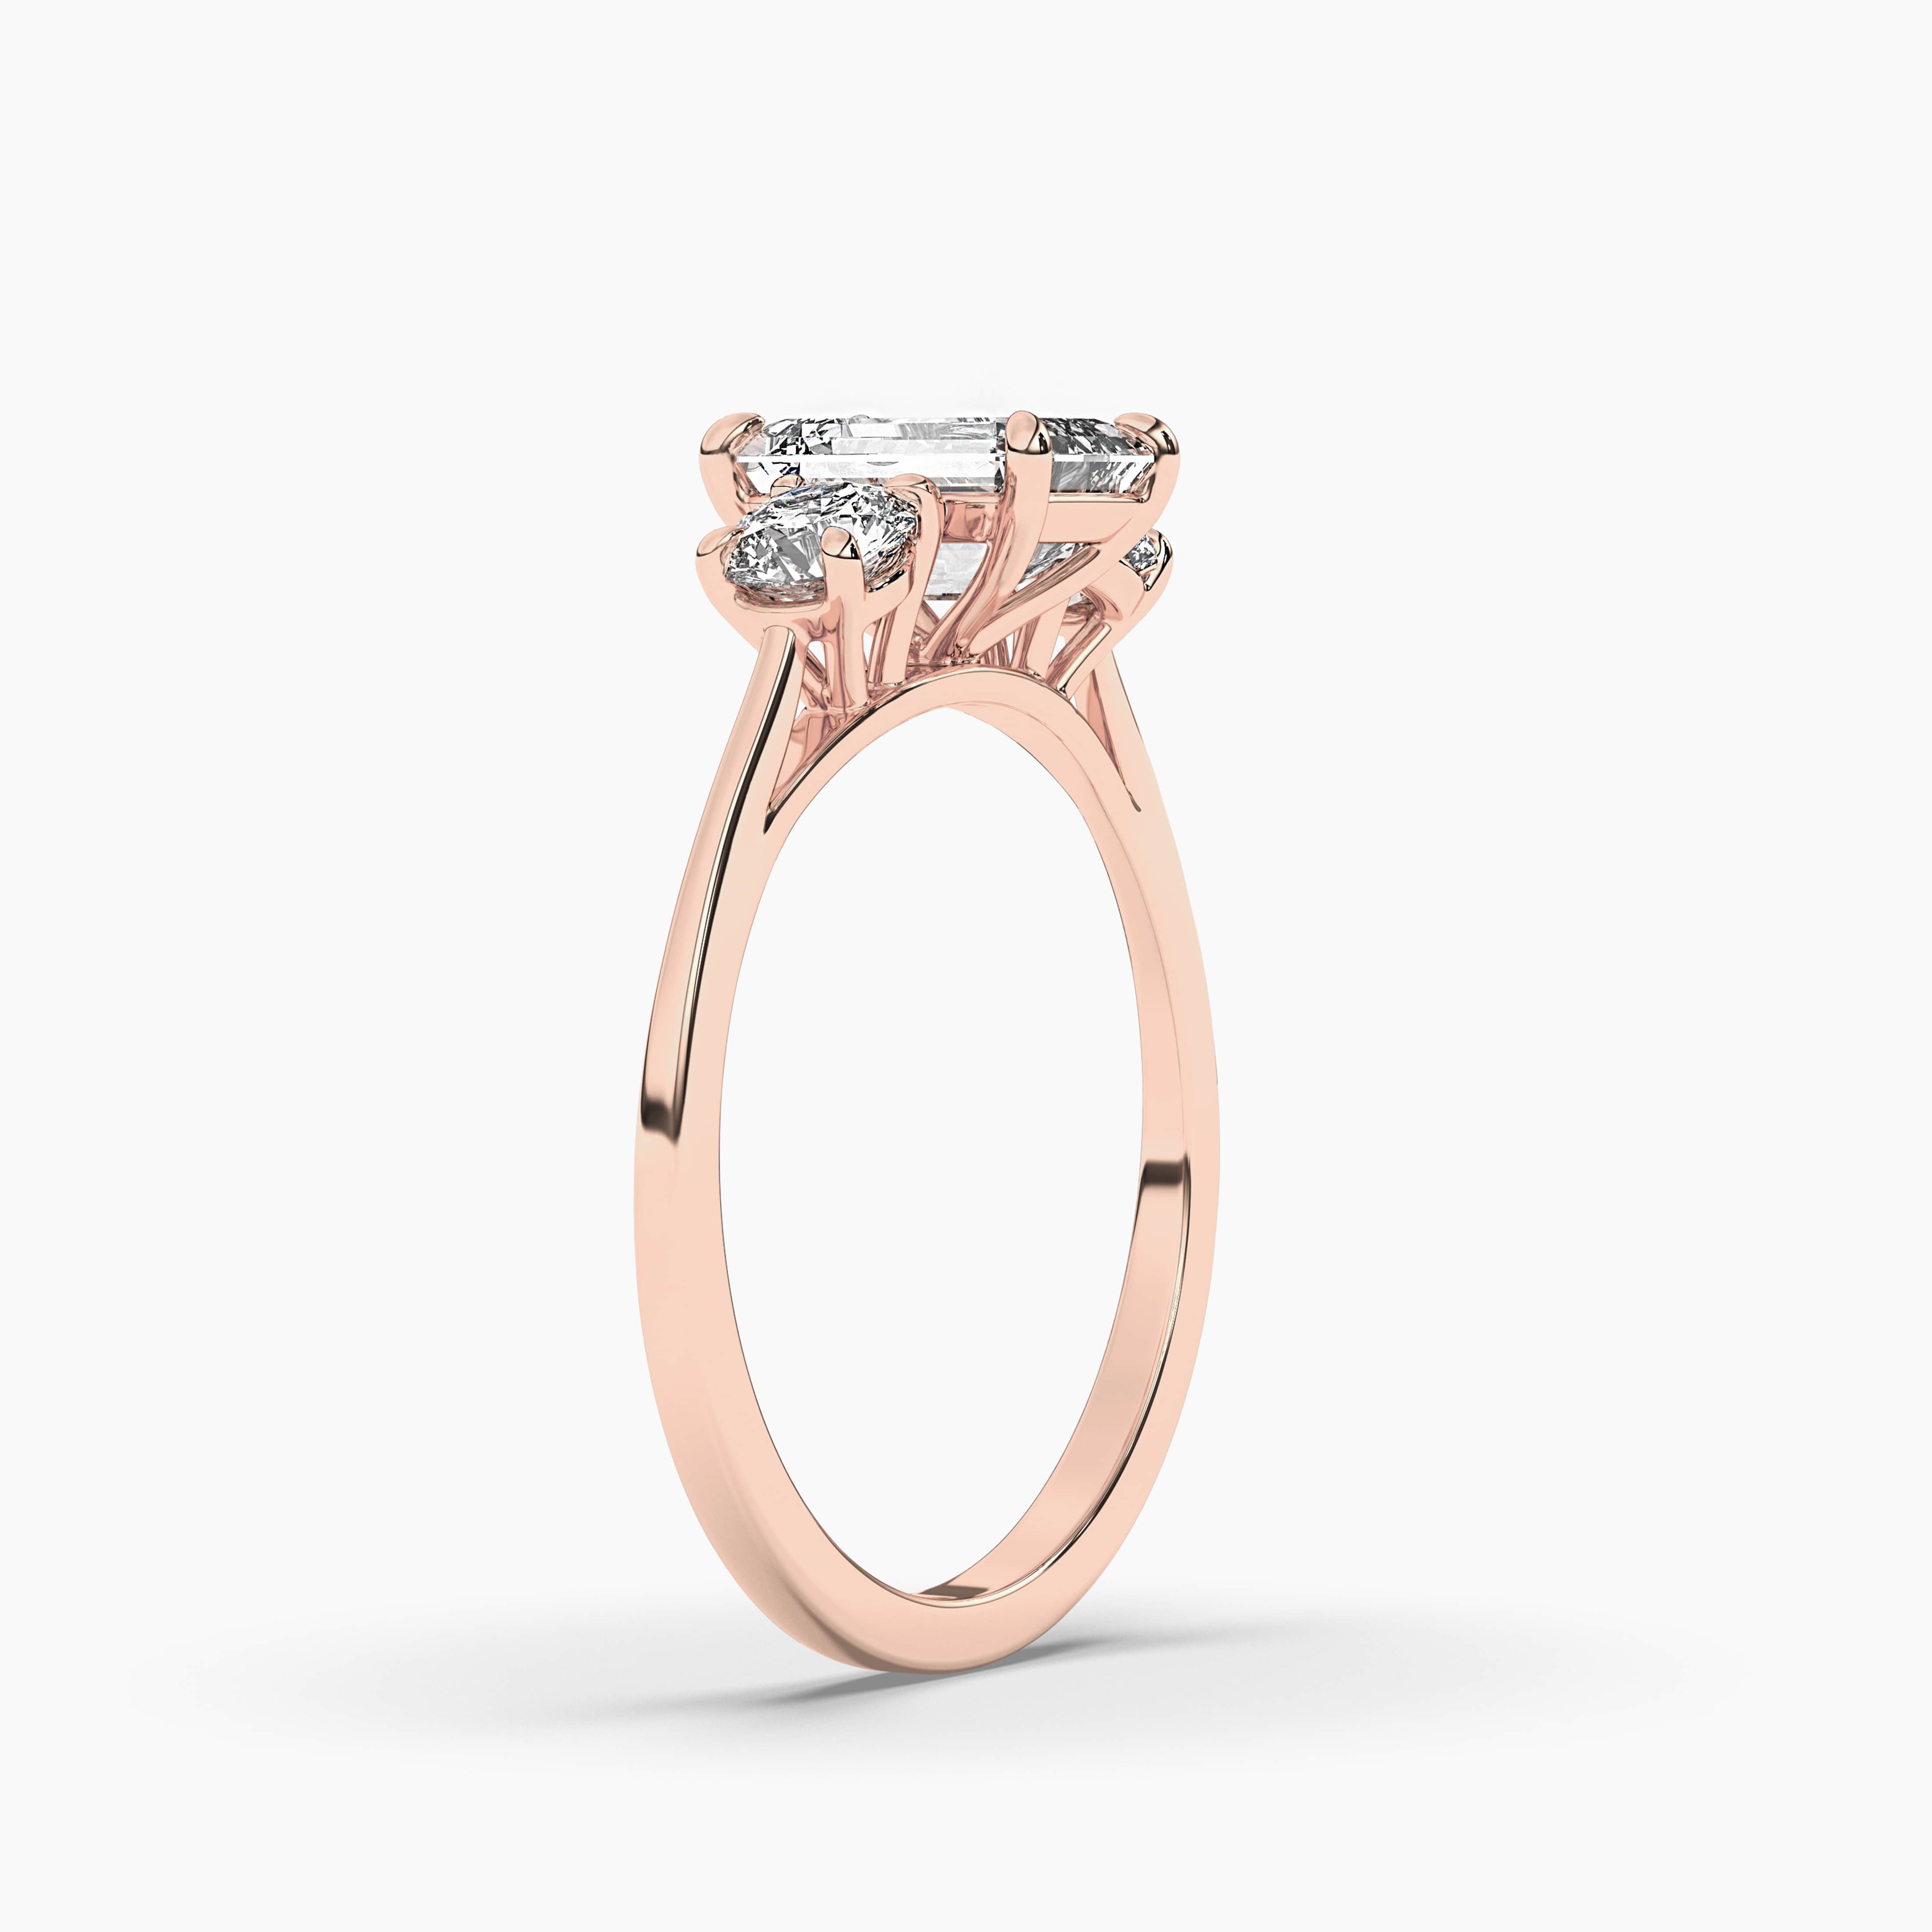 Emerald cut emerald engagement ring rose gold